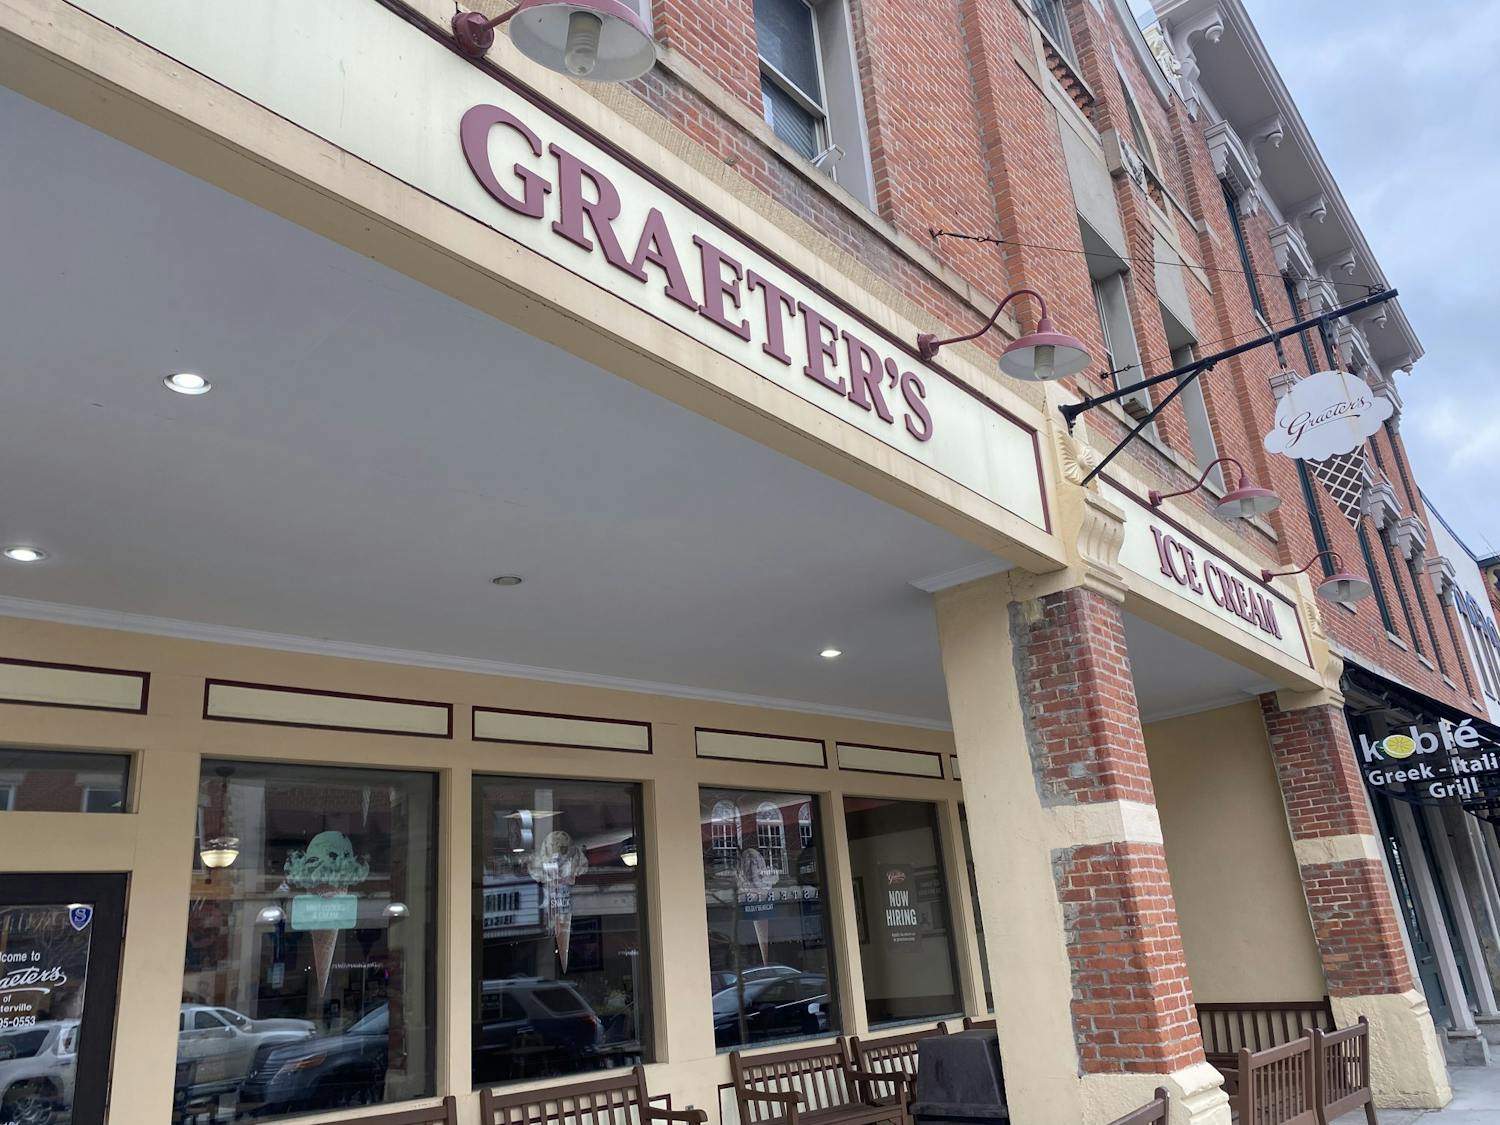 Graeter's Ice Cream in Uptown Westerville